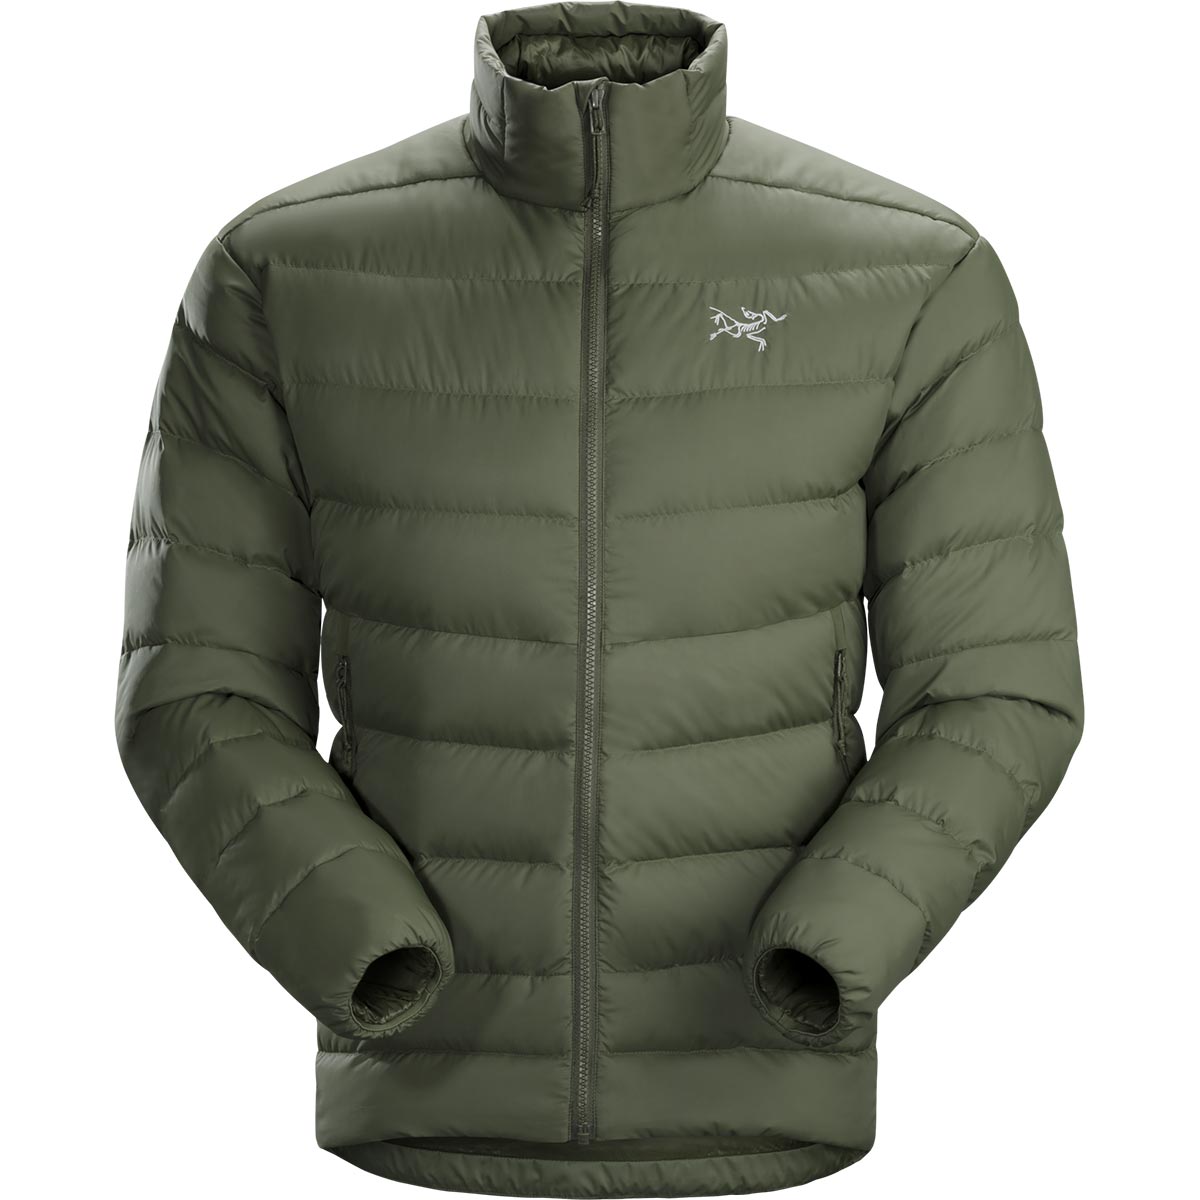 Arc'teryx Thorium AR Jacket, men's, discontinued Fall 2018 colors (free ...